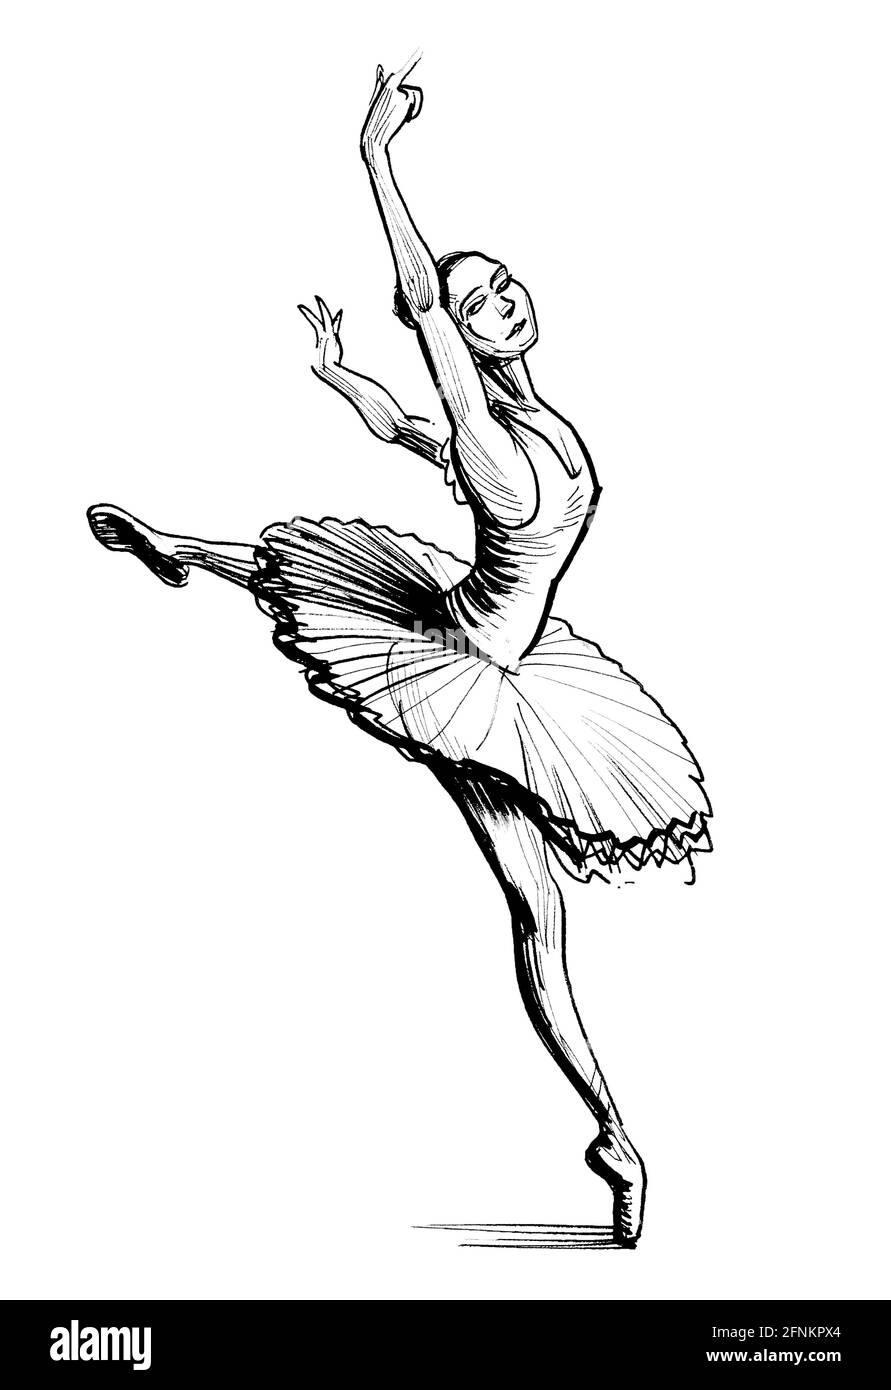 Jolie ballerine dansante. Dessin noir et blanc Photo Stock - Alamy